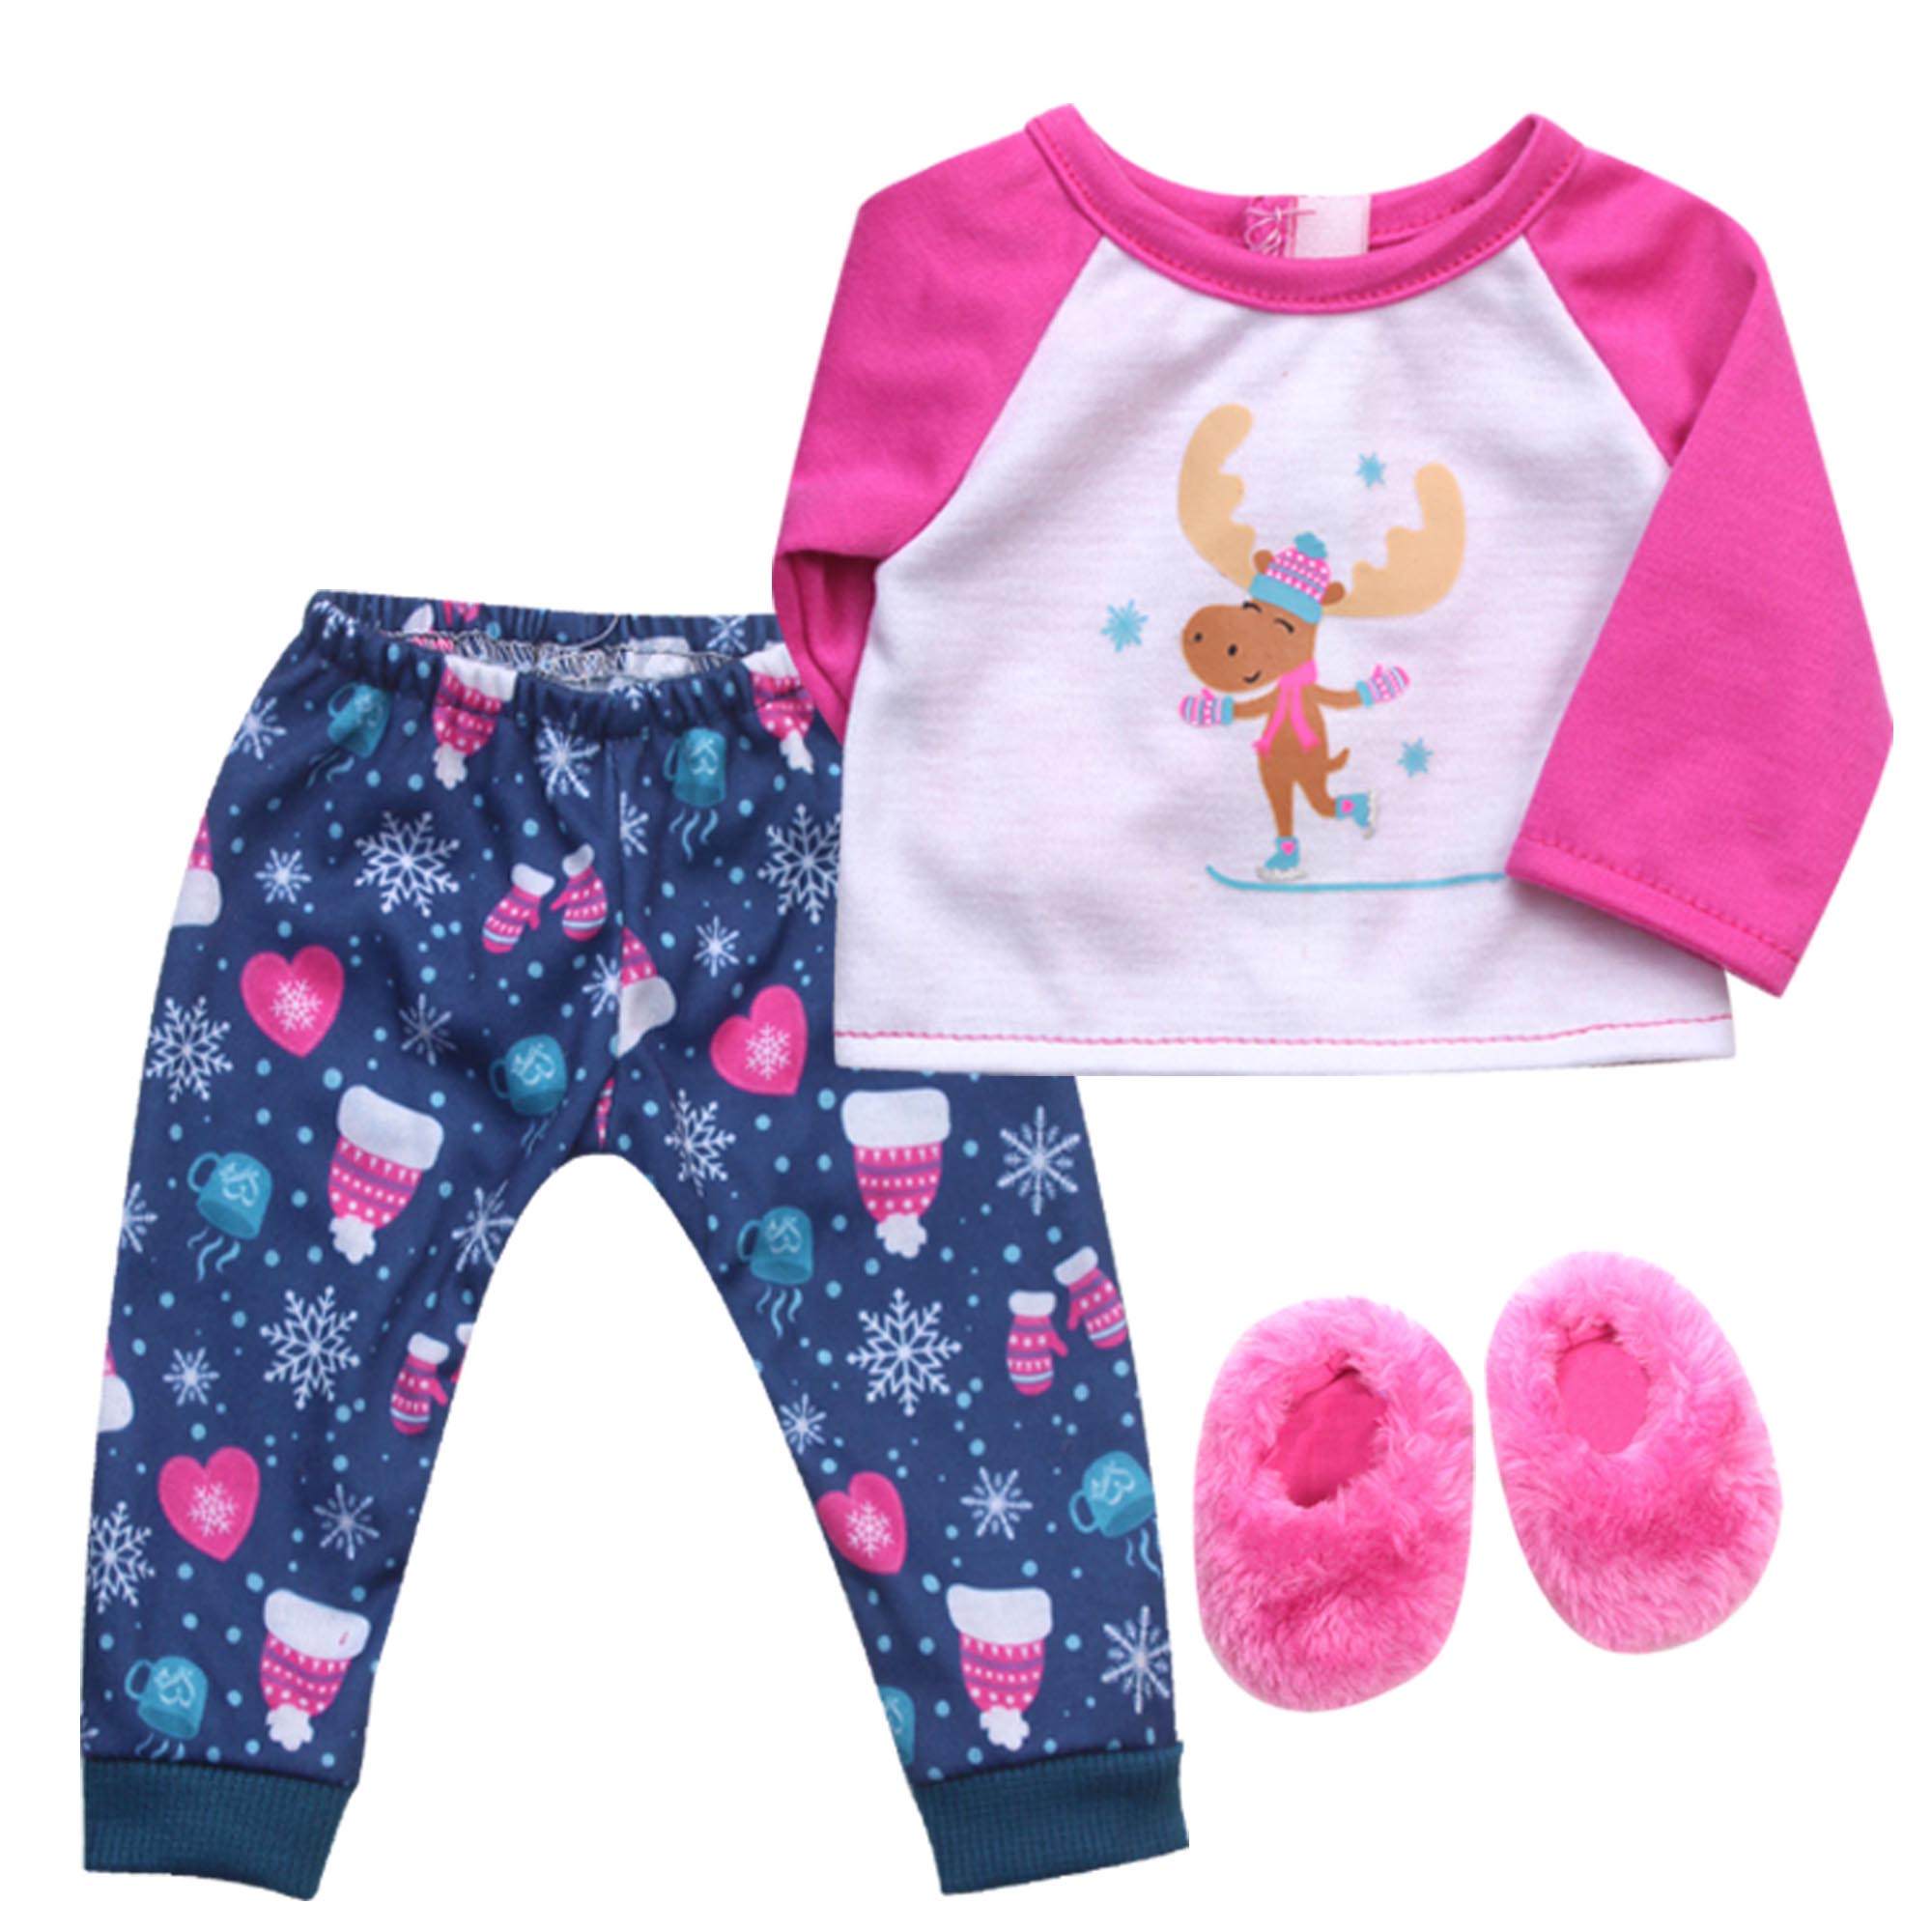 Sophia’s Super Cute Moose & Snowflake Print Long-Sleeved Raglan Winter Sleepwear Pajamas & Fuzzy Slipper Set for 18” Dolls, Blue/Pink